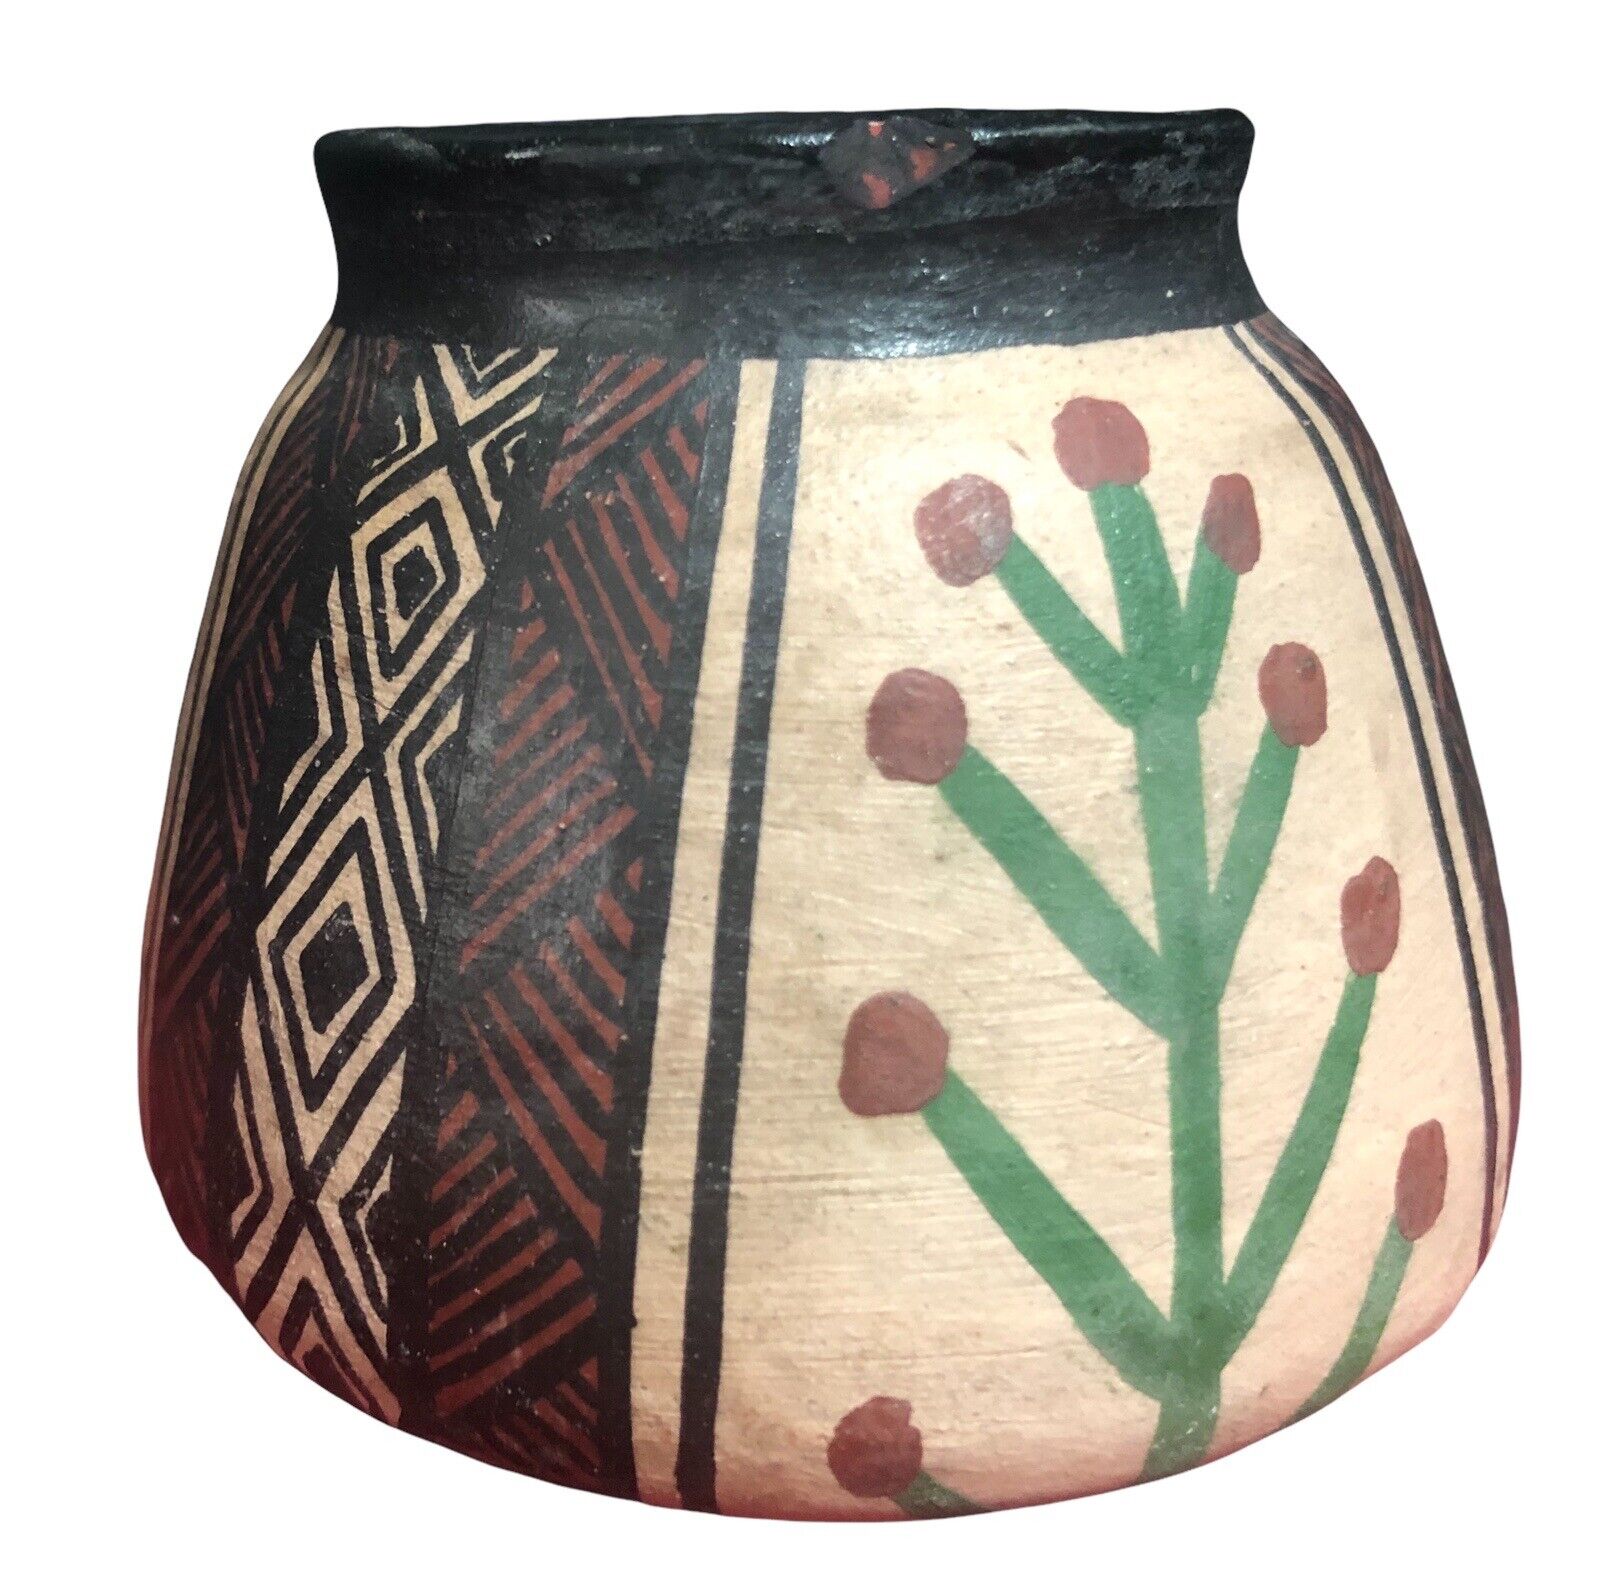 Tiny Peruvian Incan Terra Cotta Vase Handmade Handpainted in PERU (2.5”) Signed